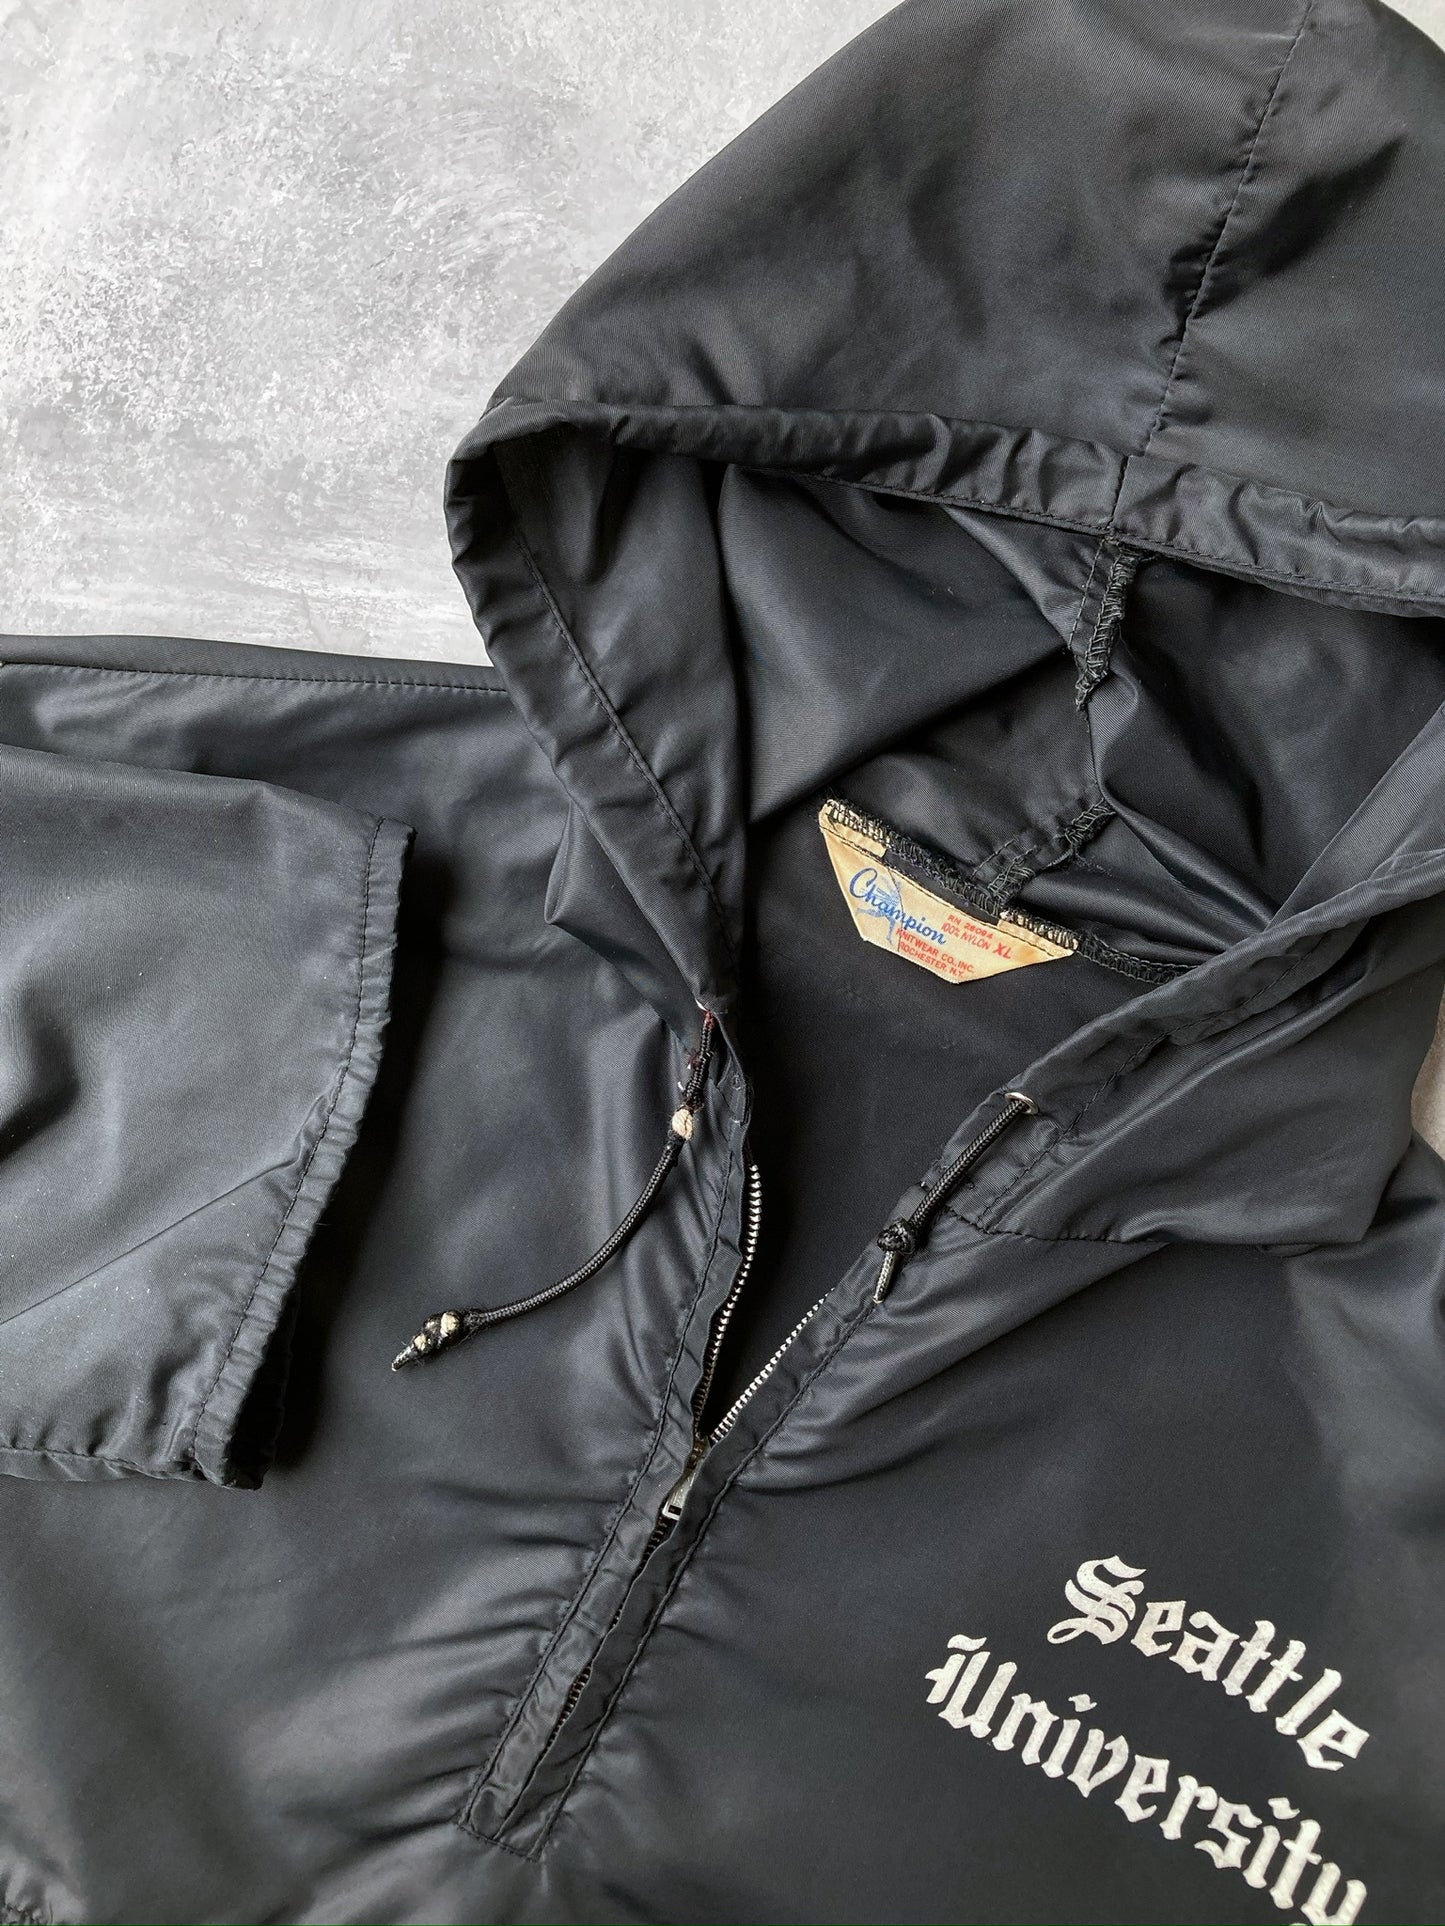 Seattle University Anorak Jacket 60's - XL